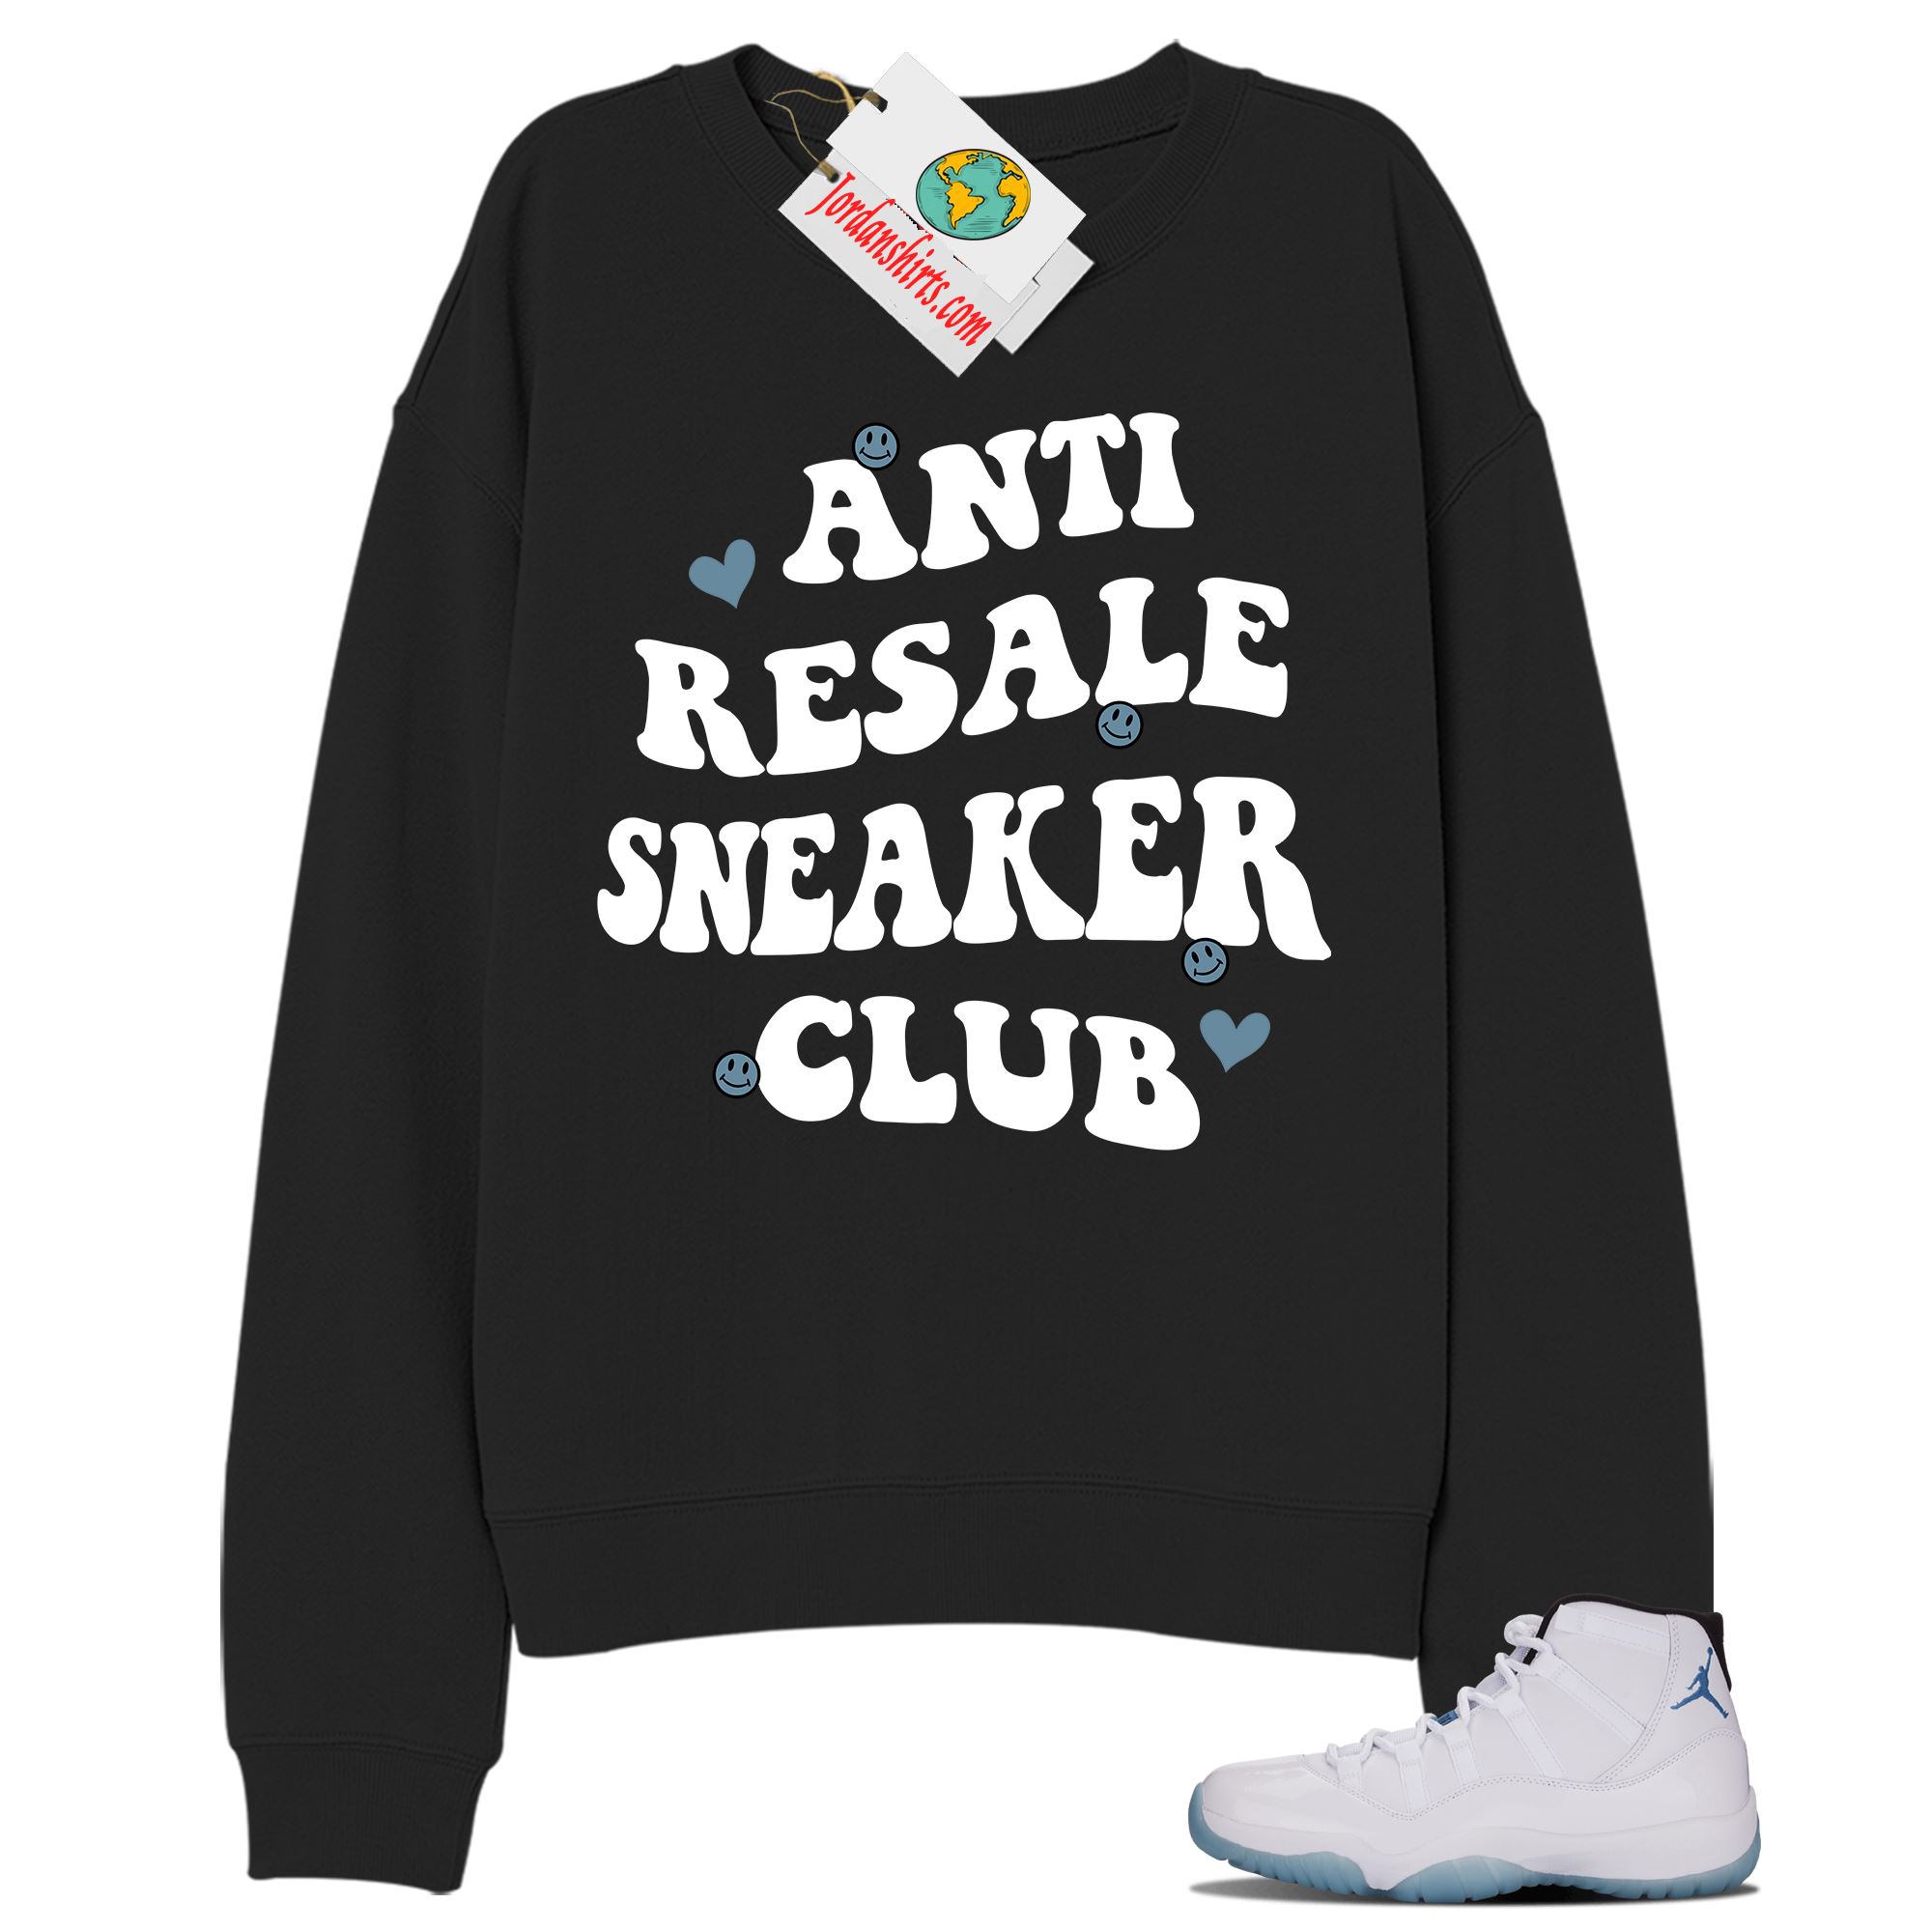 Jordan 11 Sweatshirt, Anti Resale Sneaker Club Black Sweatshirt Air Jordan 11 Legend Blue 11s Full Size Up To 5xl